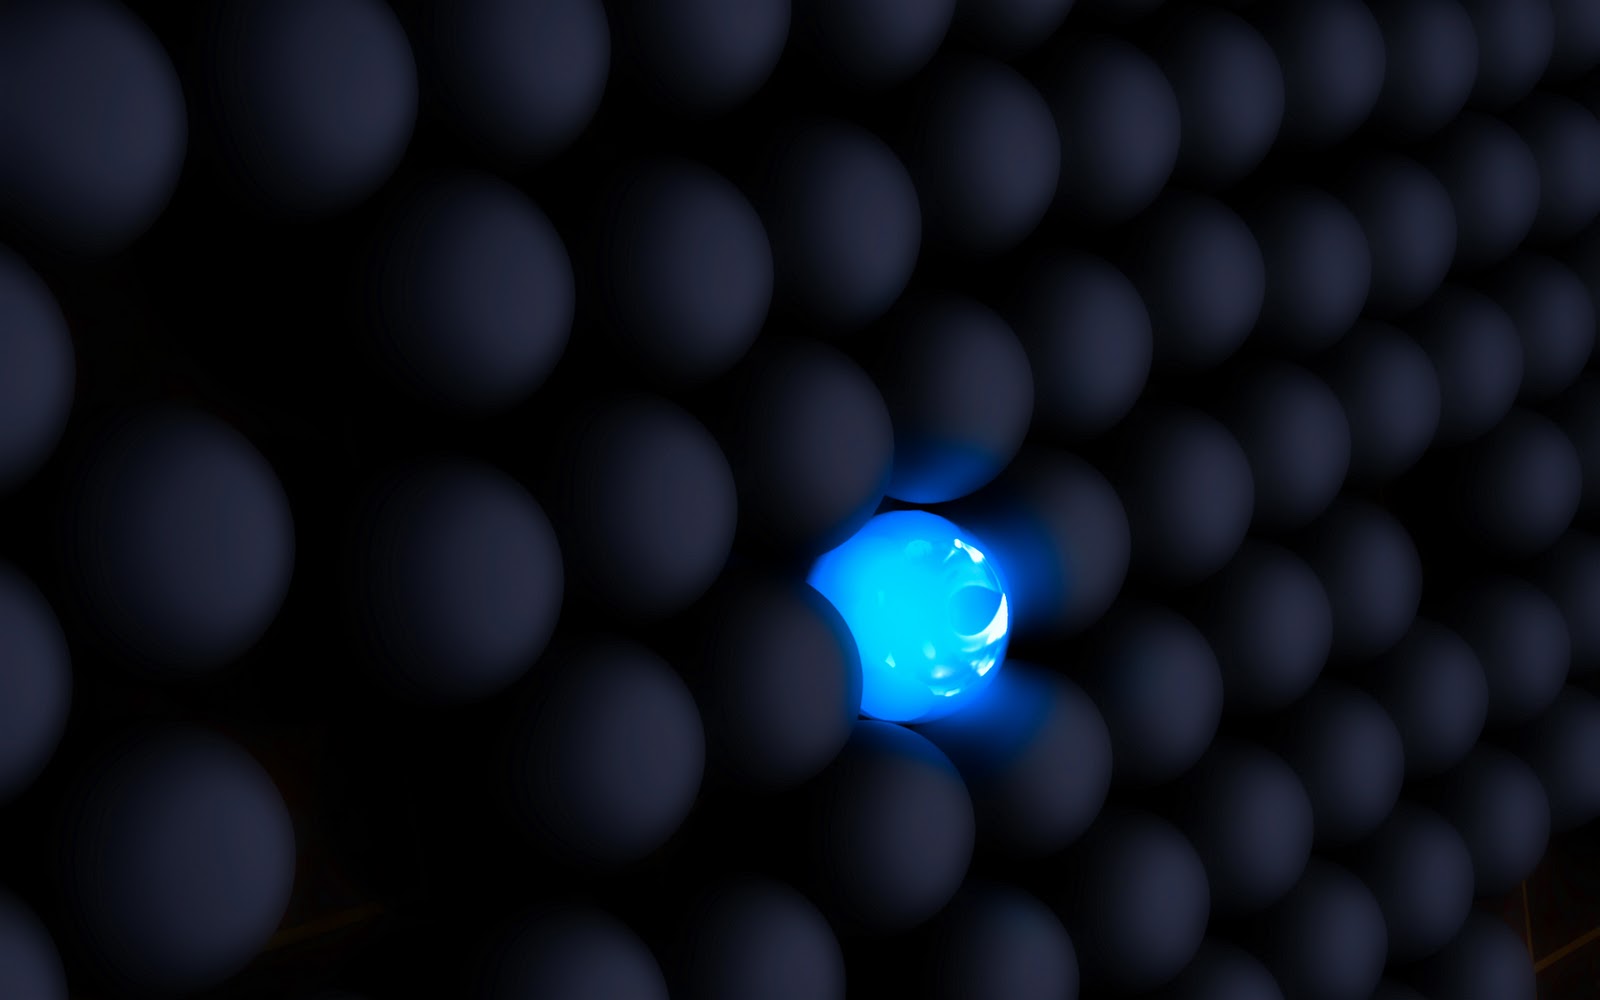 http://2.bp.blogspot.com/-wtZtcTwOYCY/T6t-xgUN_2I/AAAAAAAAON8/R_qXaYwHkVQ/s1600/3d+blue+ball+vs+black+balls+hd+wallpaper.jpg